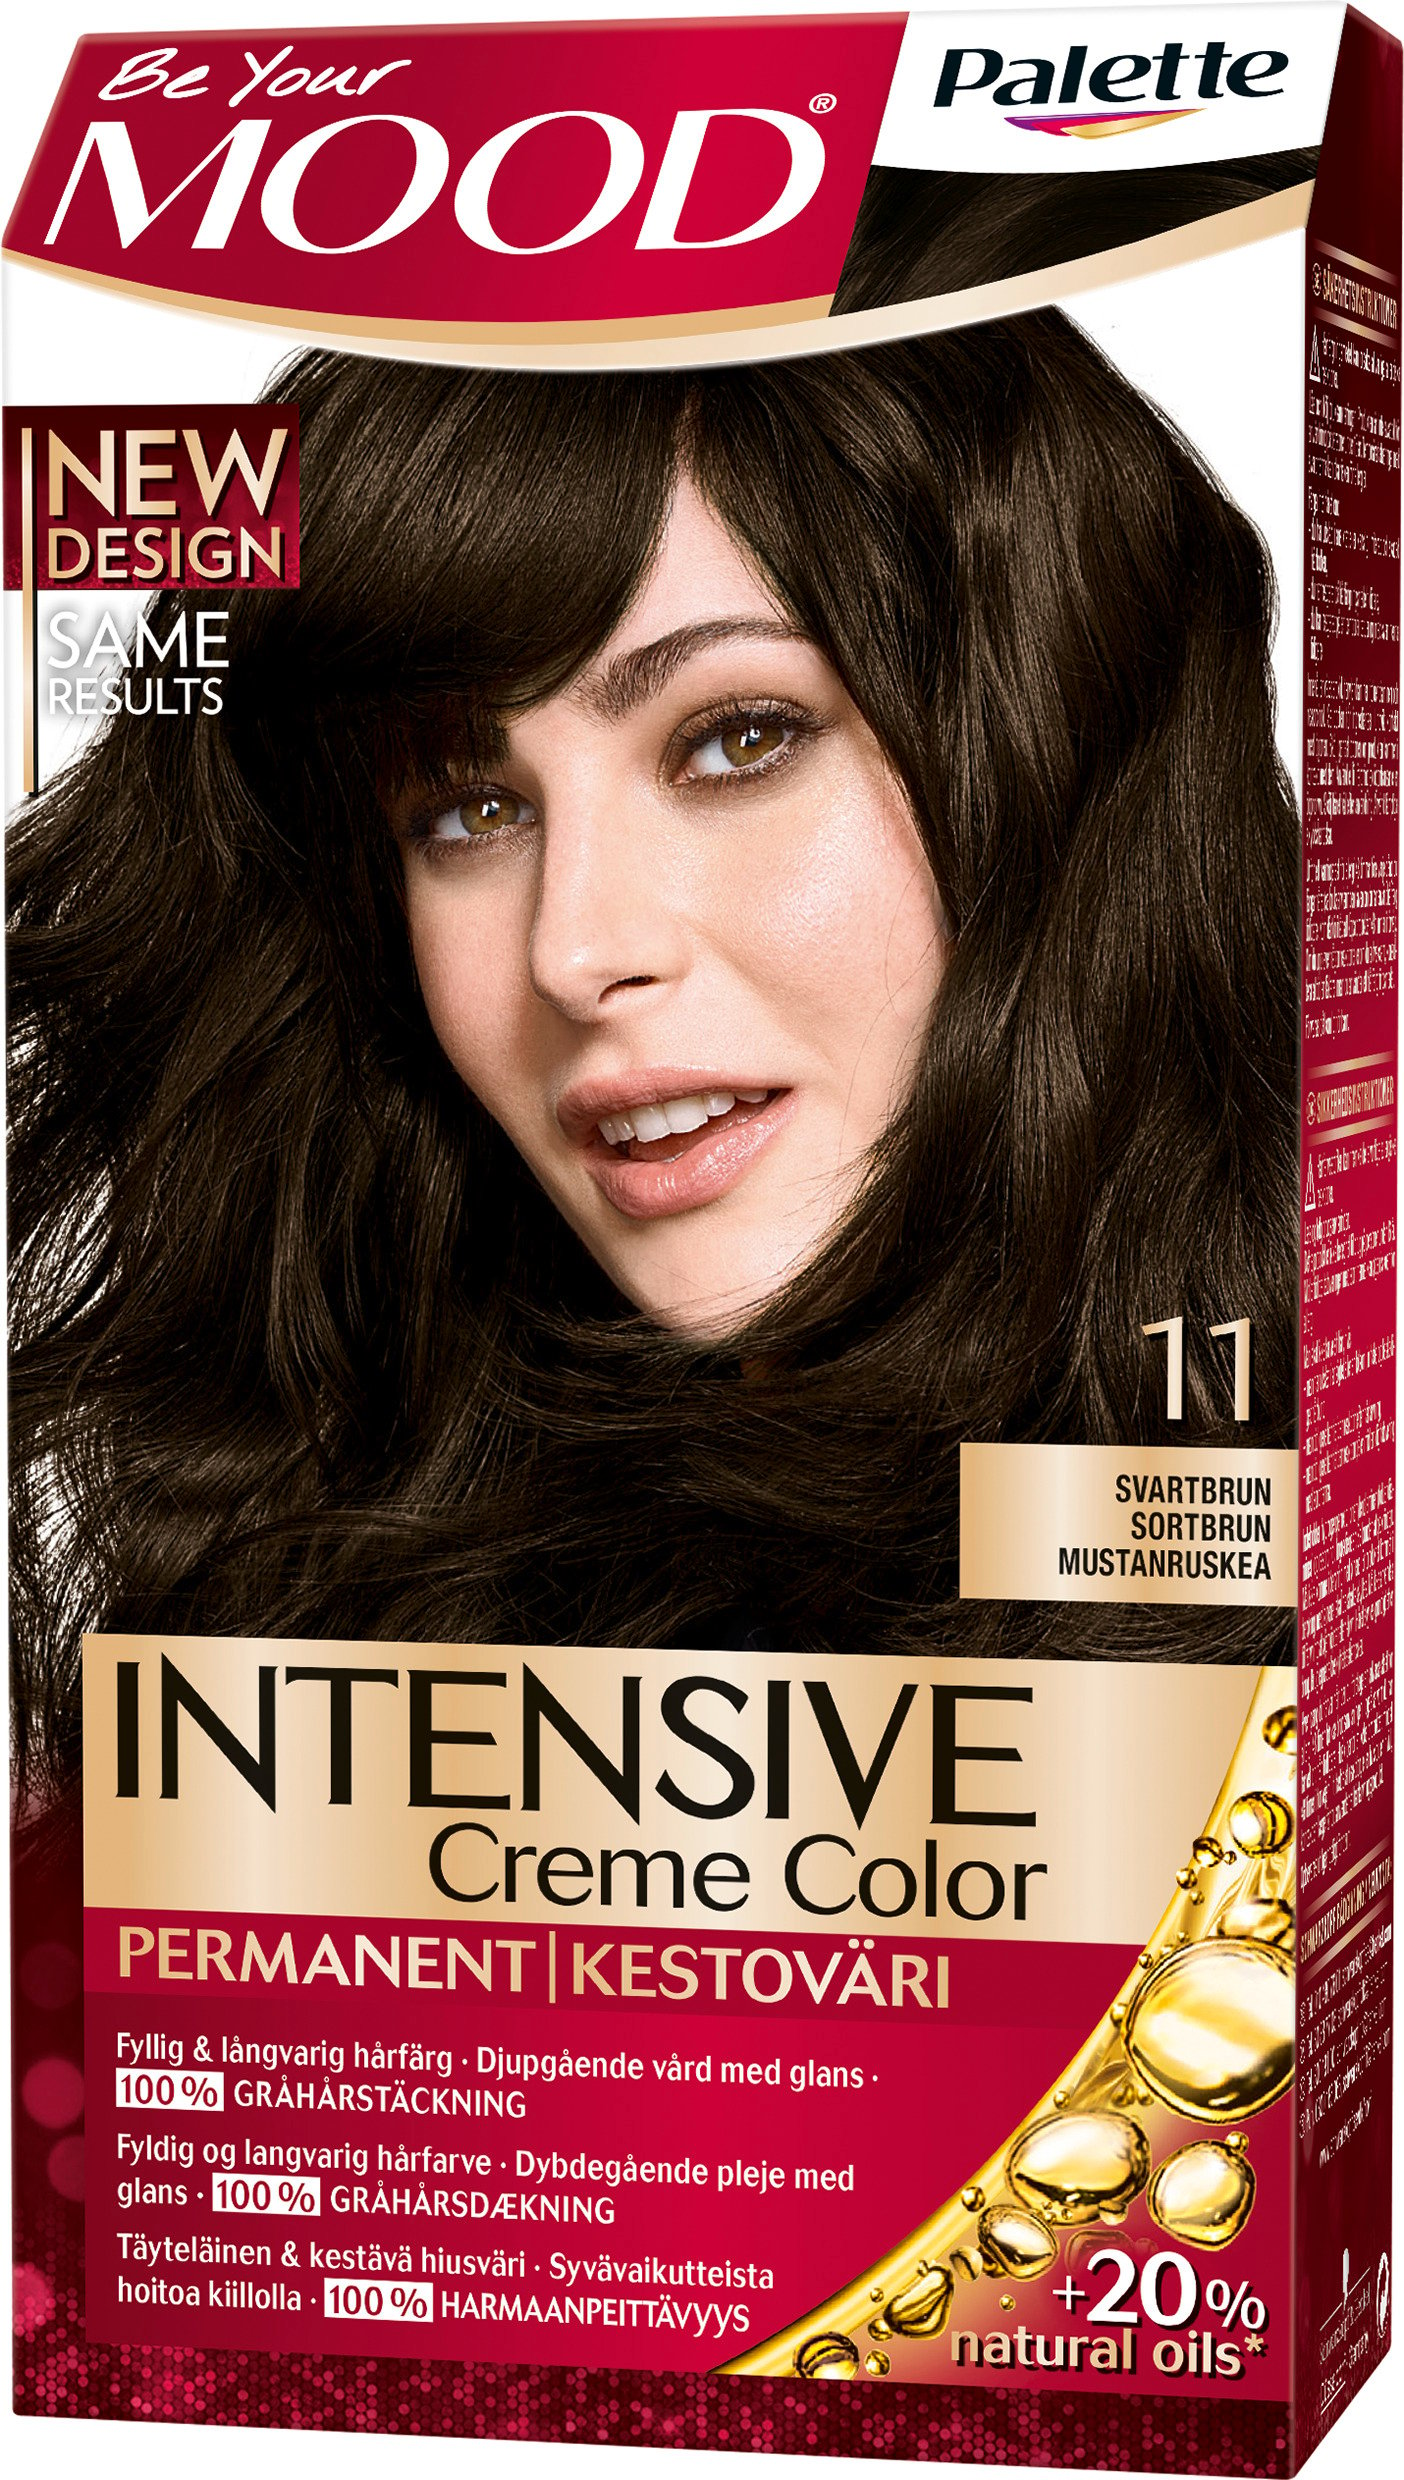 MOOD Palette Intensive Creme Color 11 Svartbrun